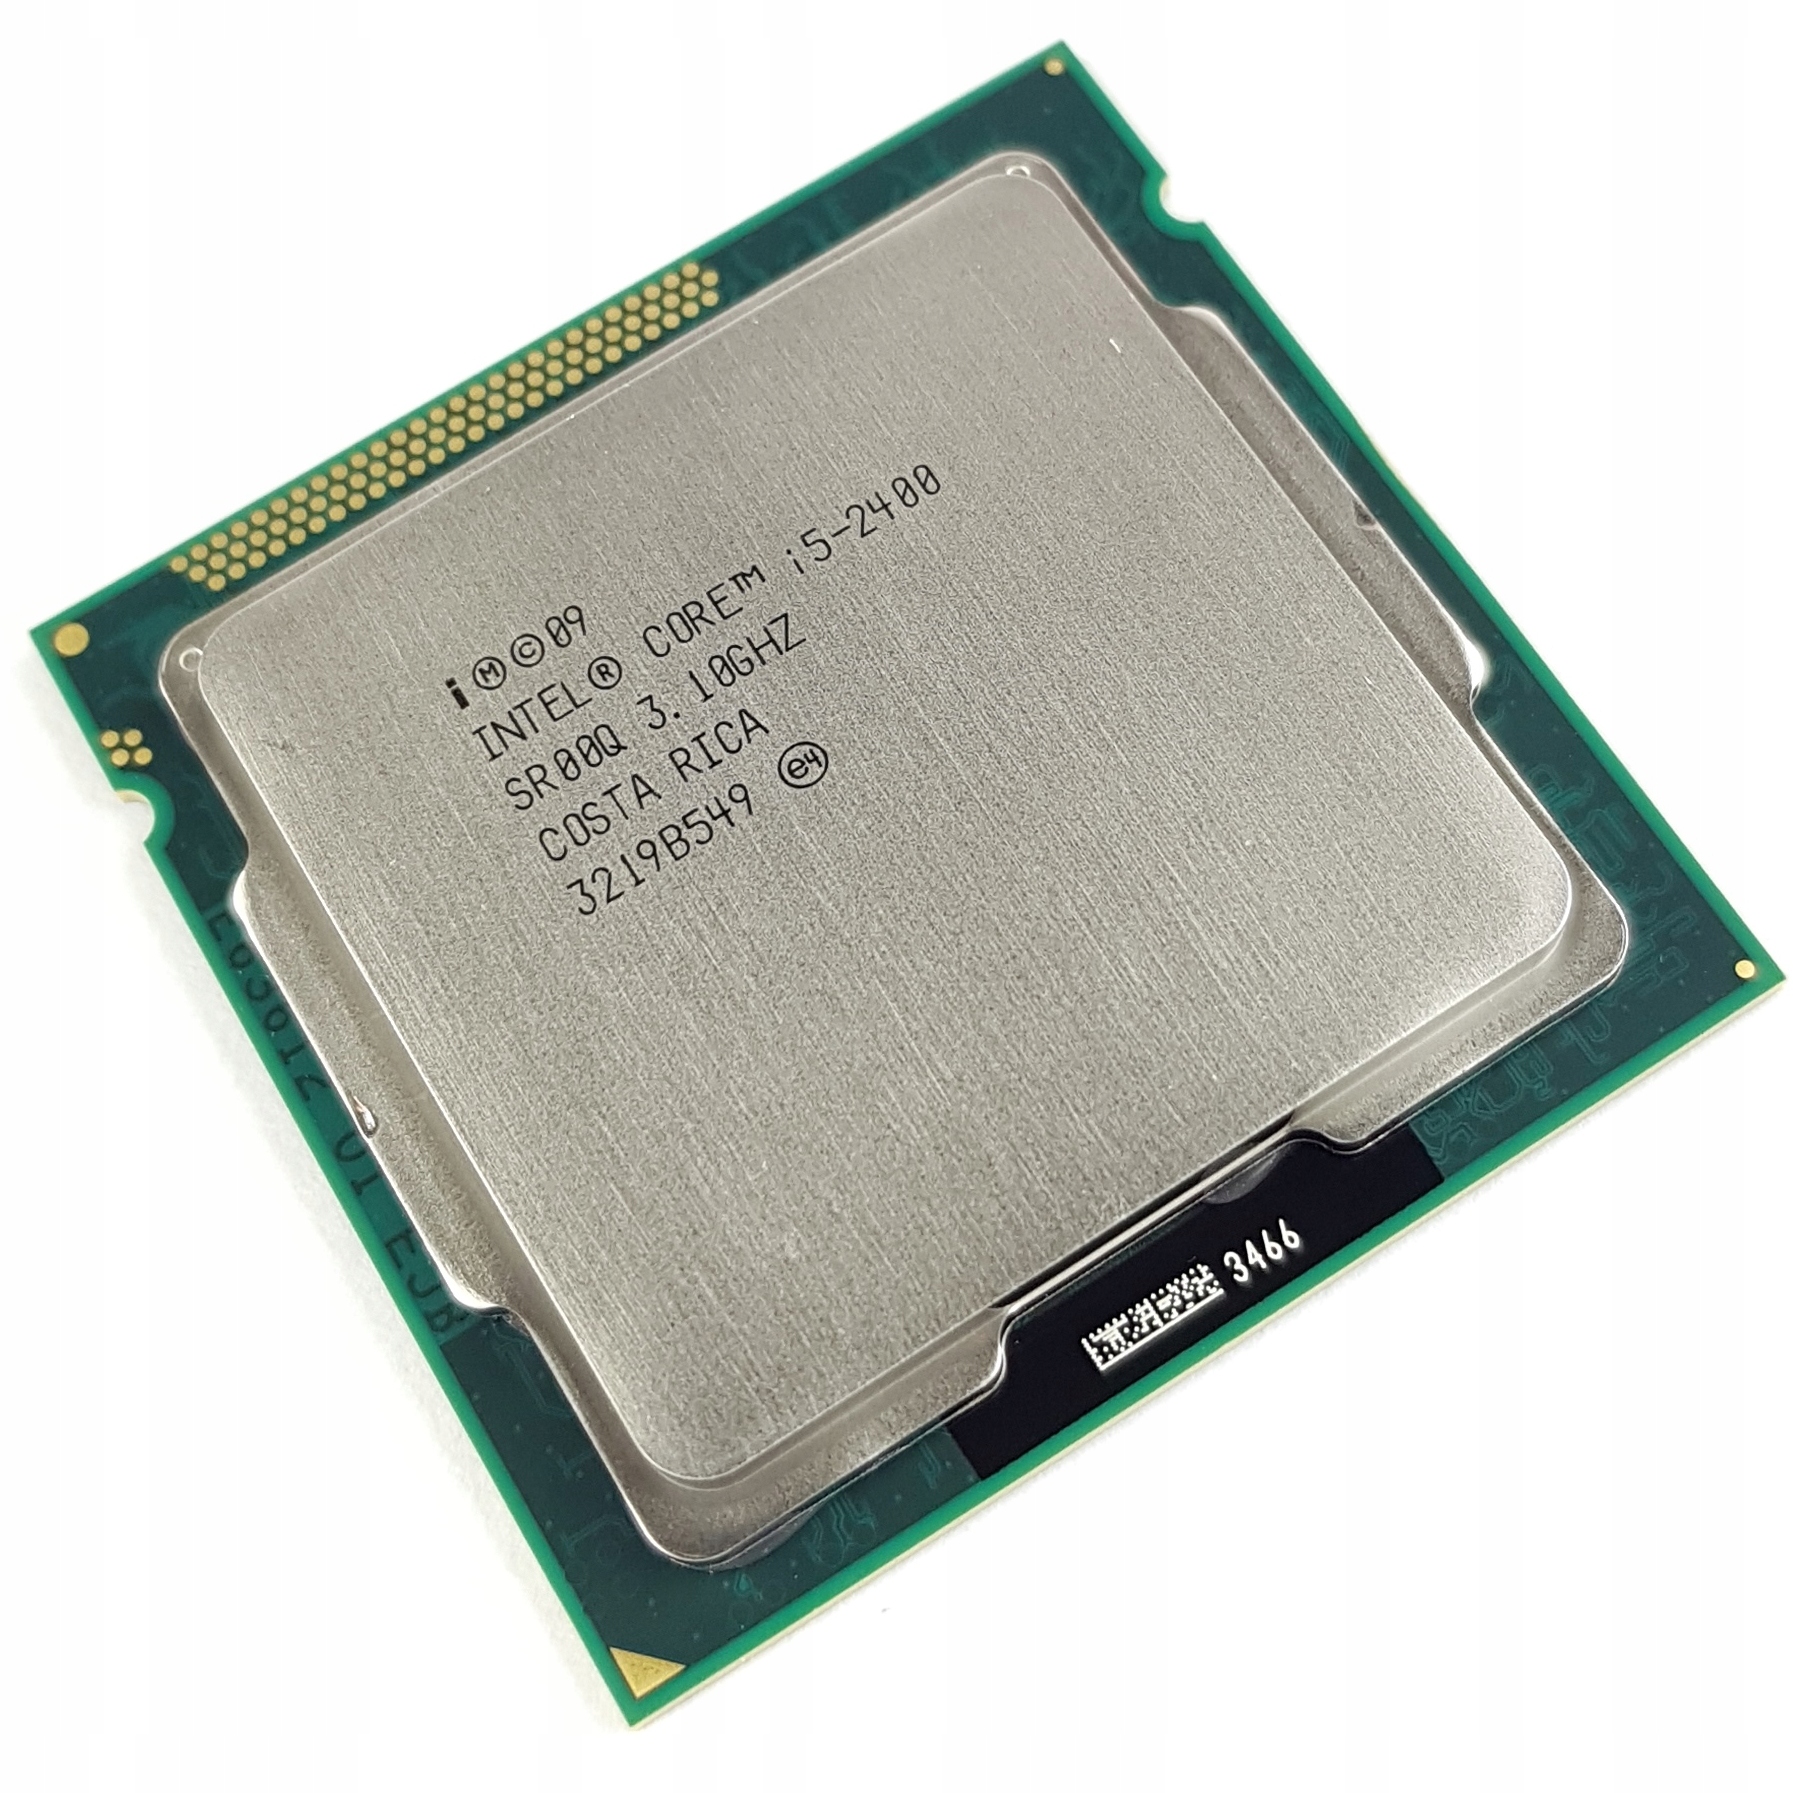 Intel i3 3.3 ghz. Intel Core i5-2400 Sandy Bridge lga1155, 4 x 3100 МГЦ. I5 2400 CPU @ 3.10GHZ. Intel Core i5-2400 Sandy Bridge (3100mhz, lga1155, l3 6144kb). Процессор Intel Core i5 1155.